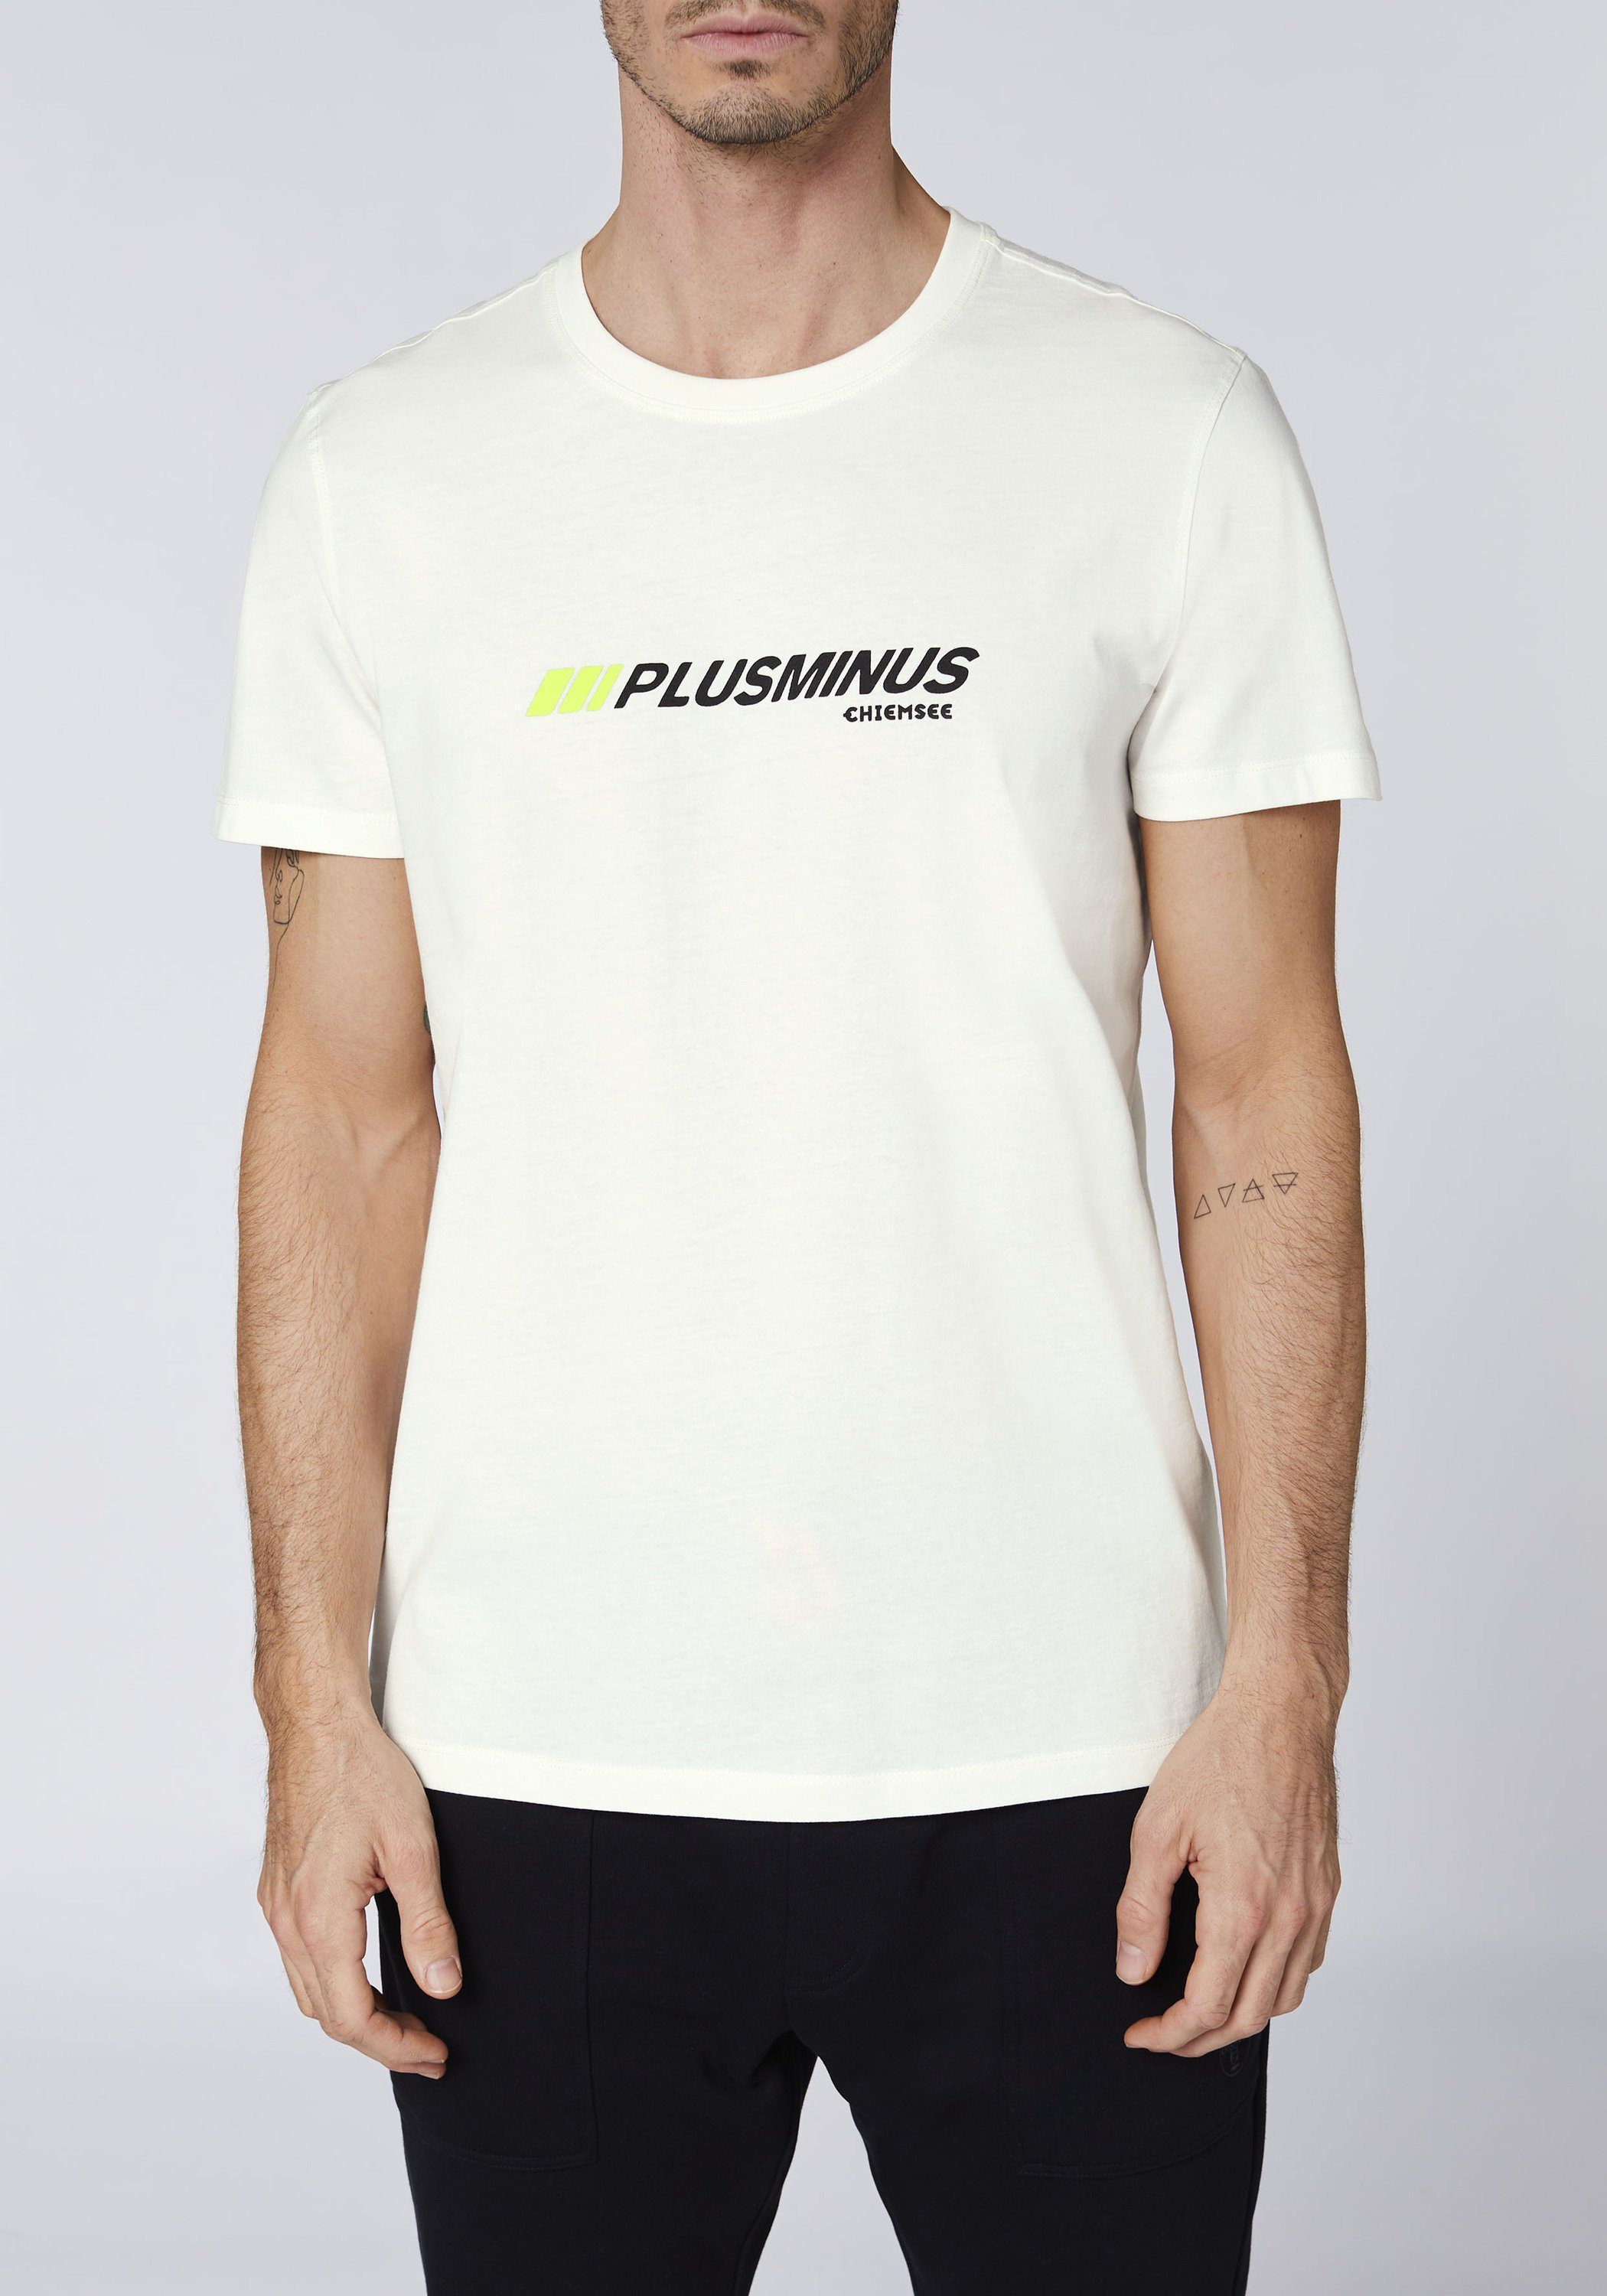 White Chiemsee T-Shirt PLUS-MINUS-Print 1 mit Star Print-Shirt